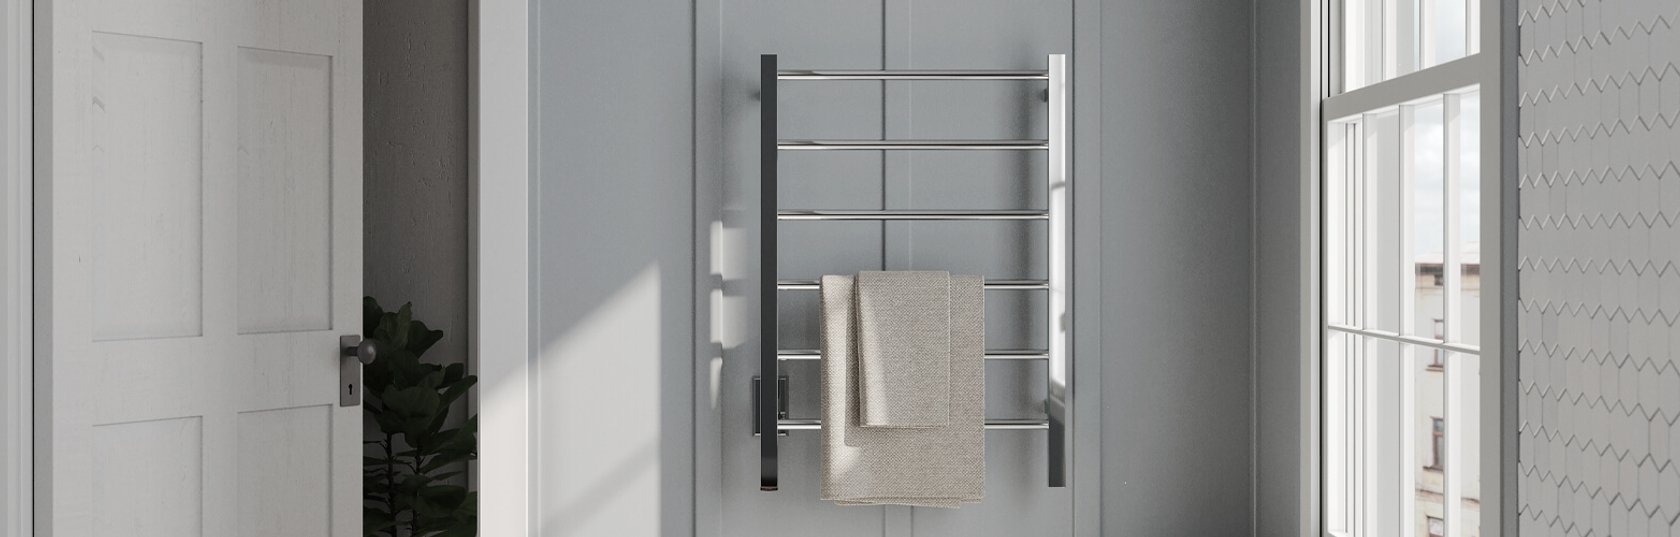 Are heated towel rails safe?